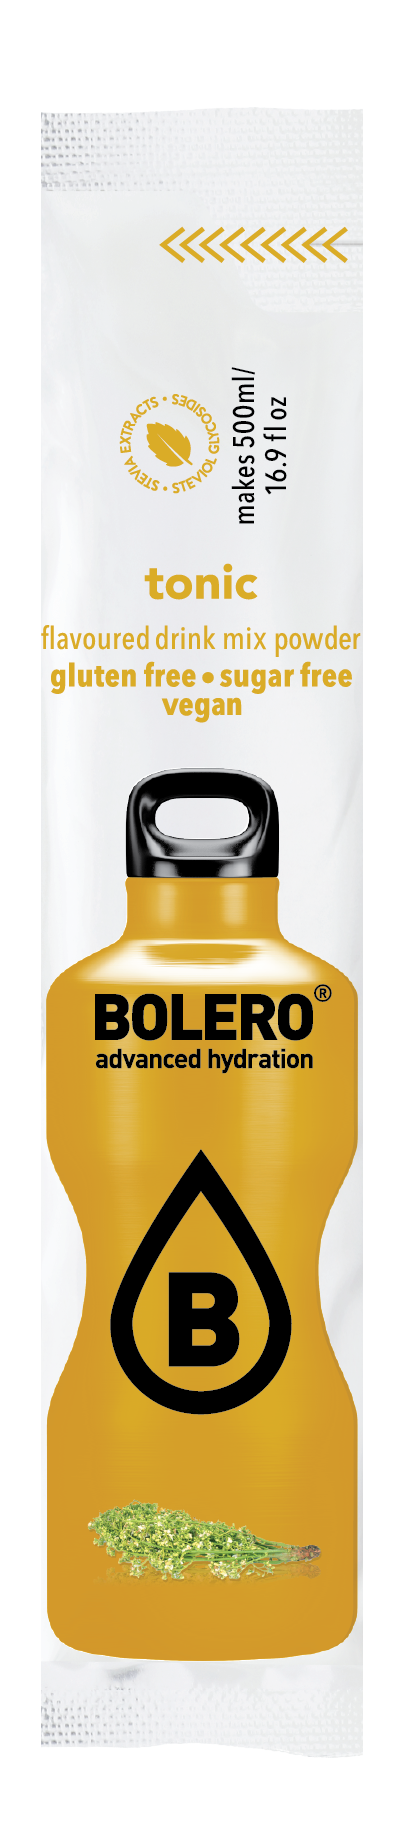 Bolero Advanced Hydration -  2 Tonic - Small Single Sachet